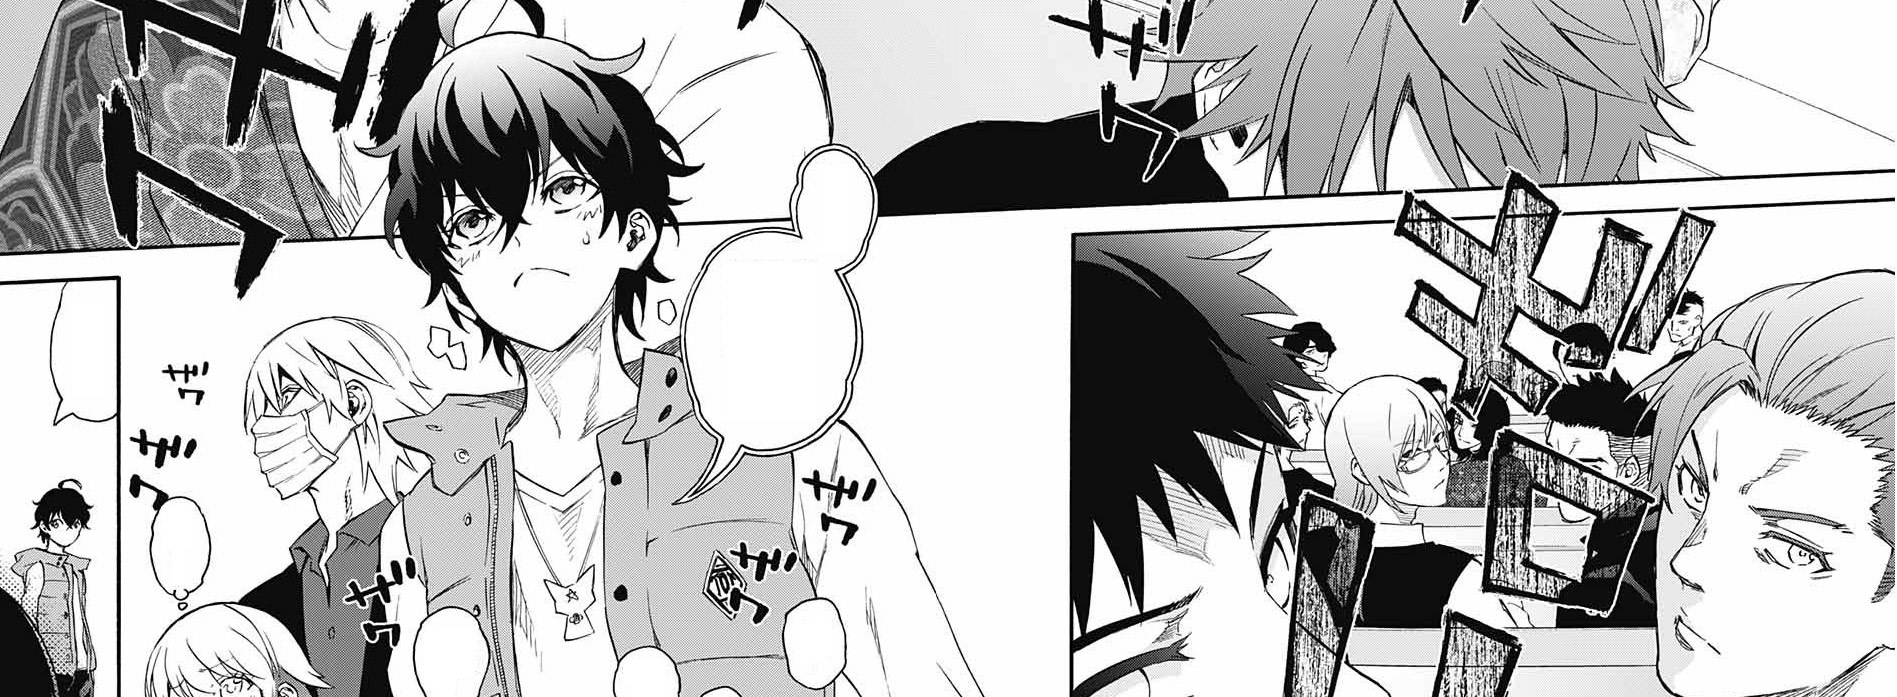 Twin Star Exorcists - Recensione del manga